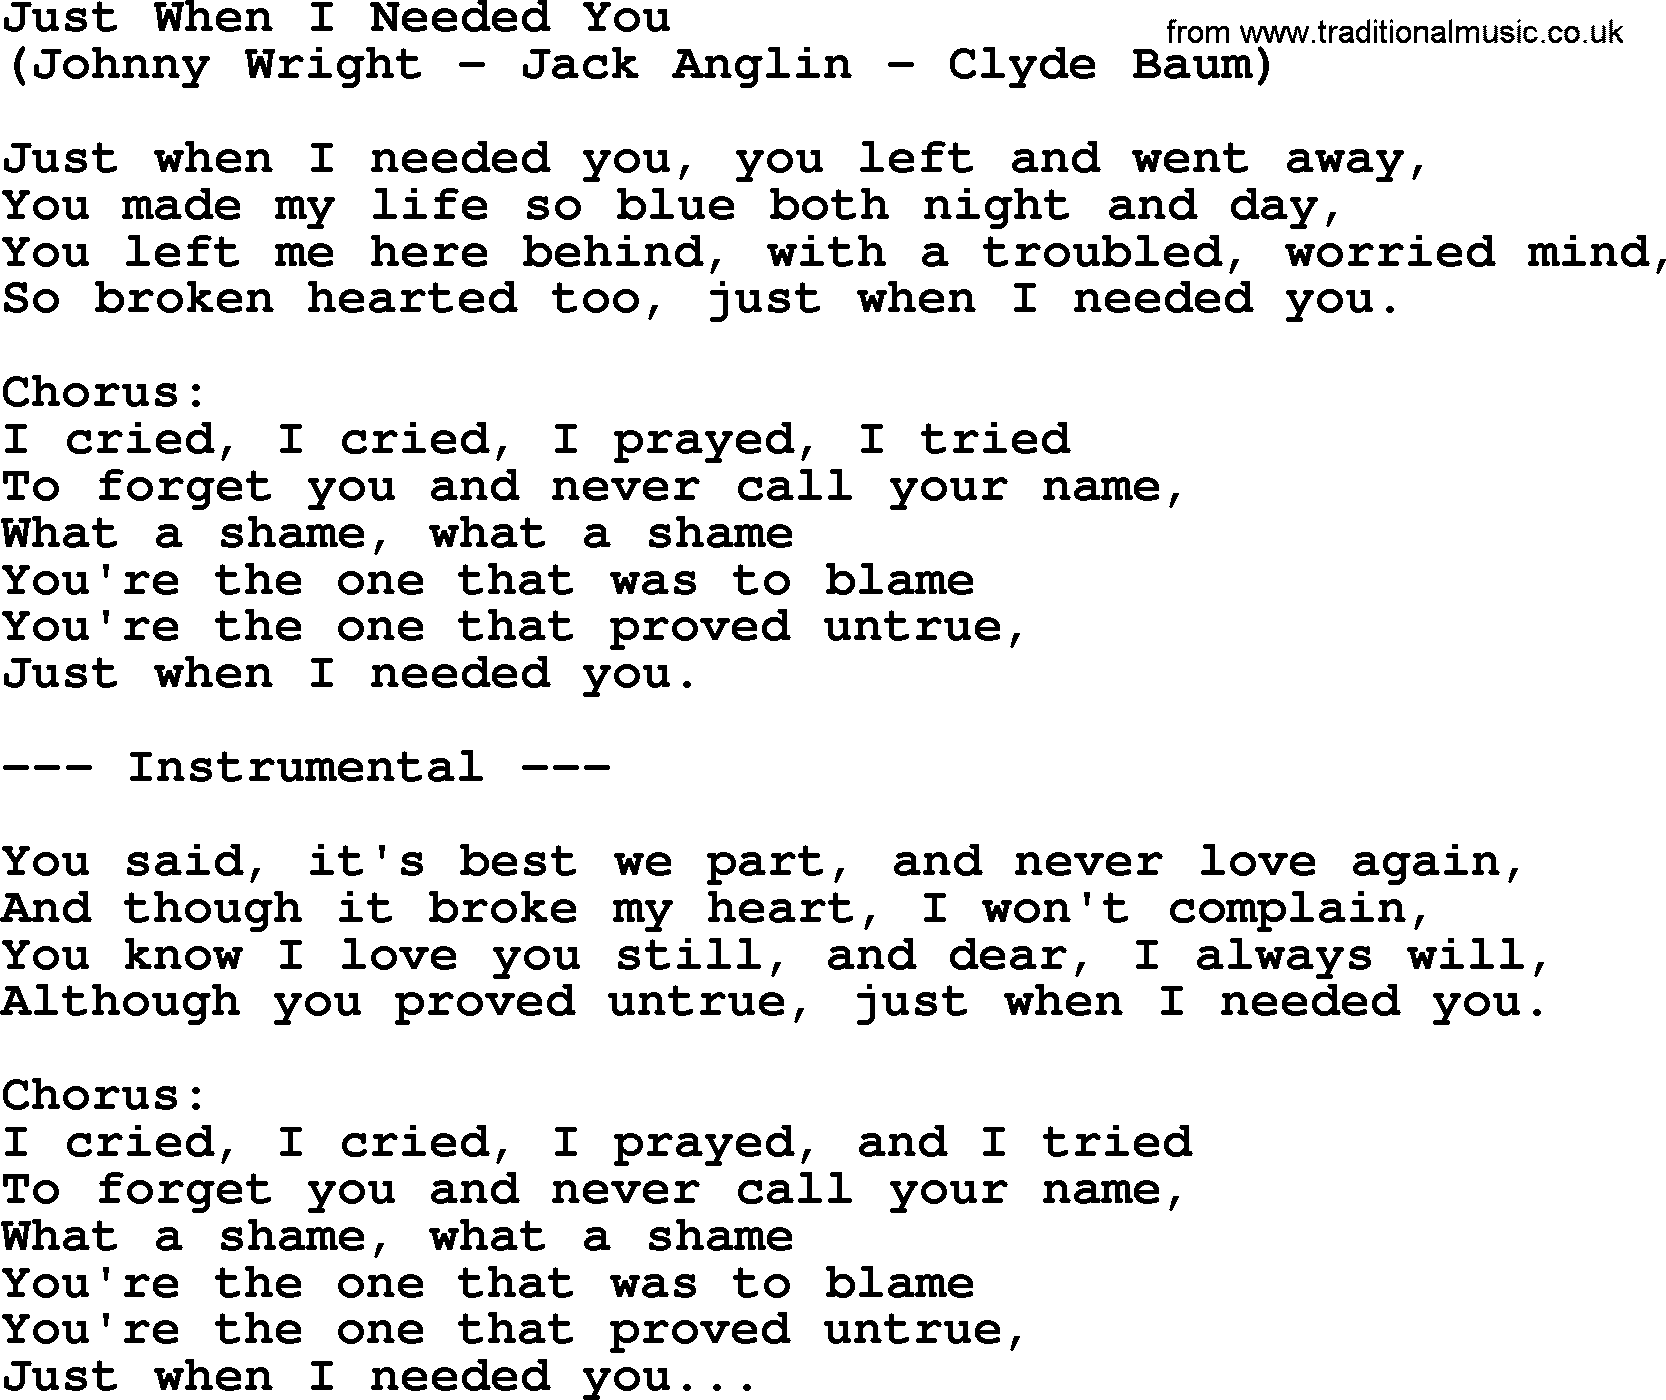 George Jones song: Just When I Needed You, lyrics